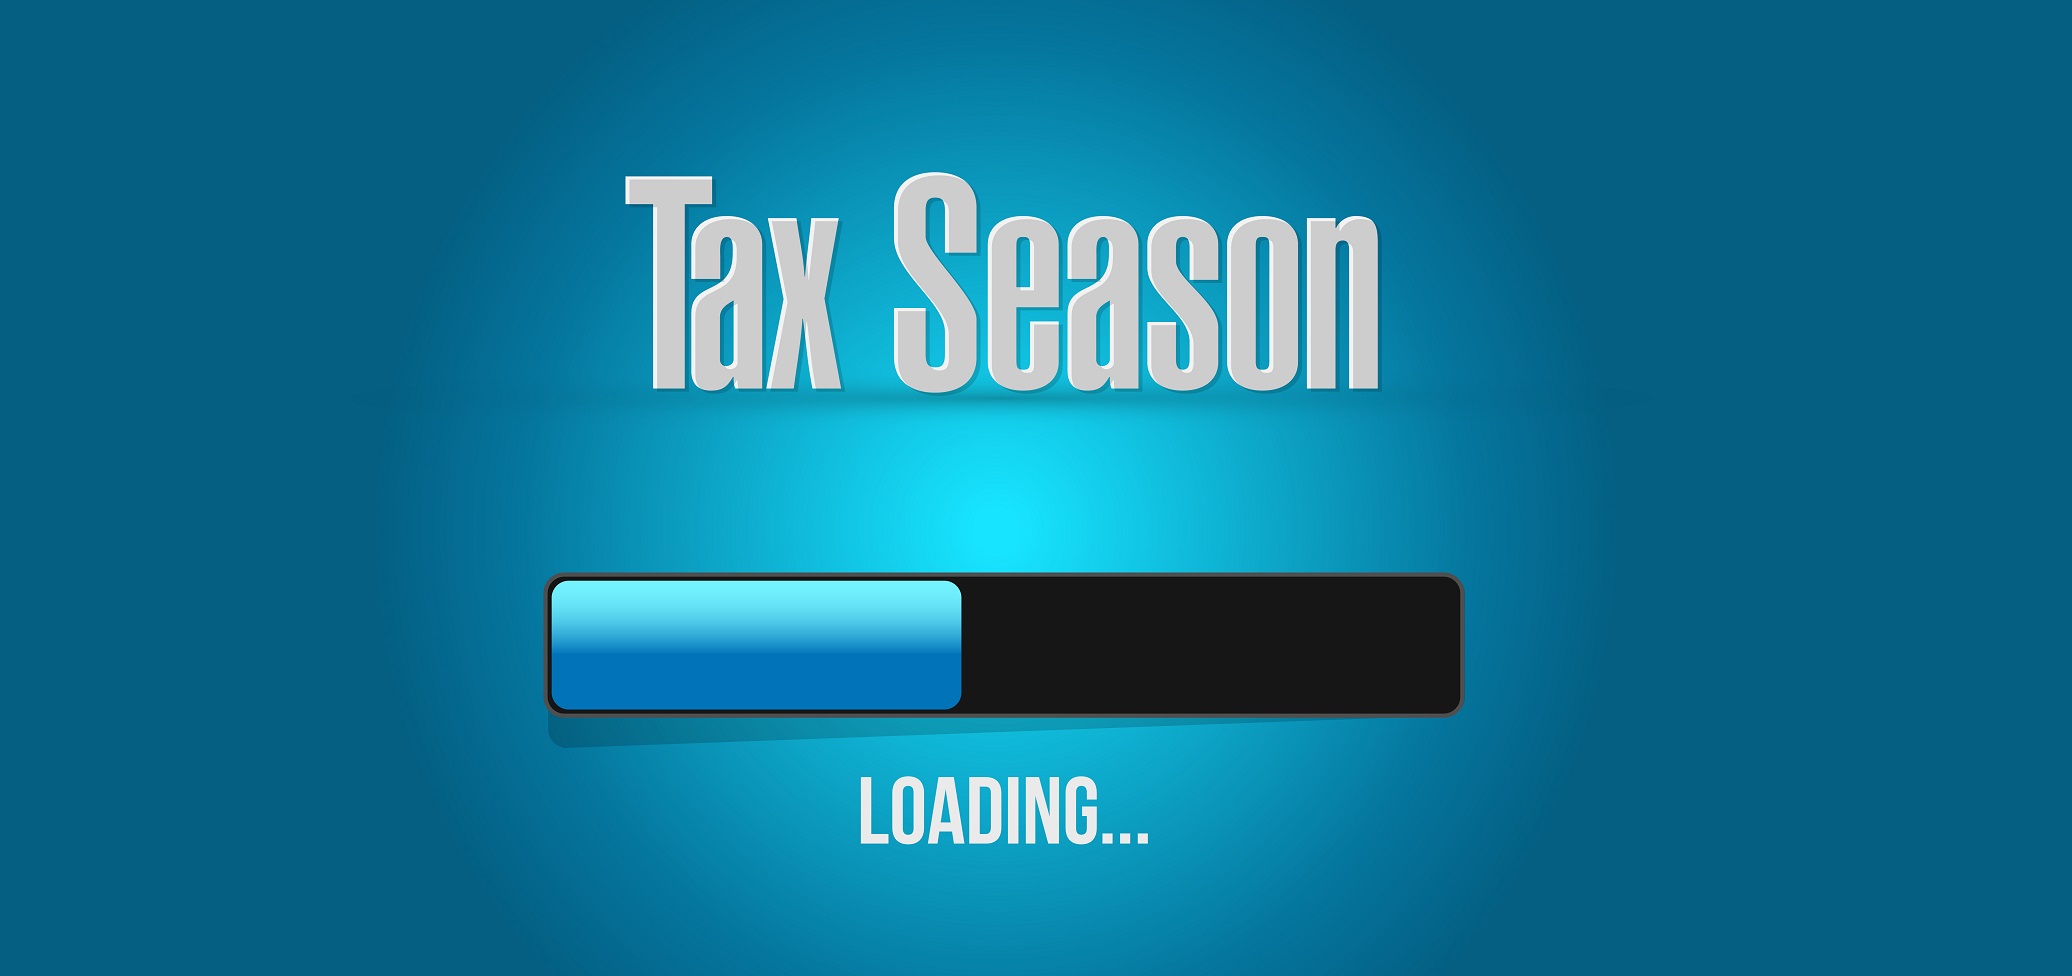 Tax season loading